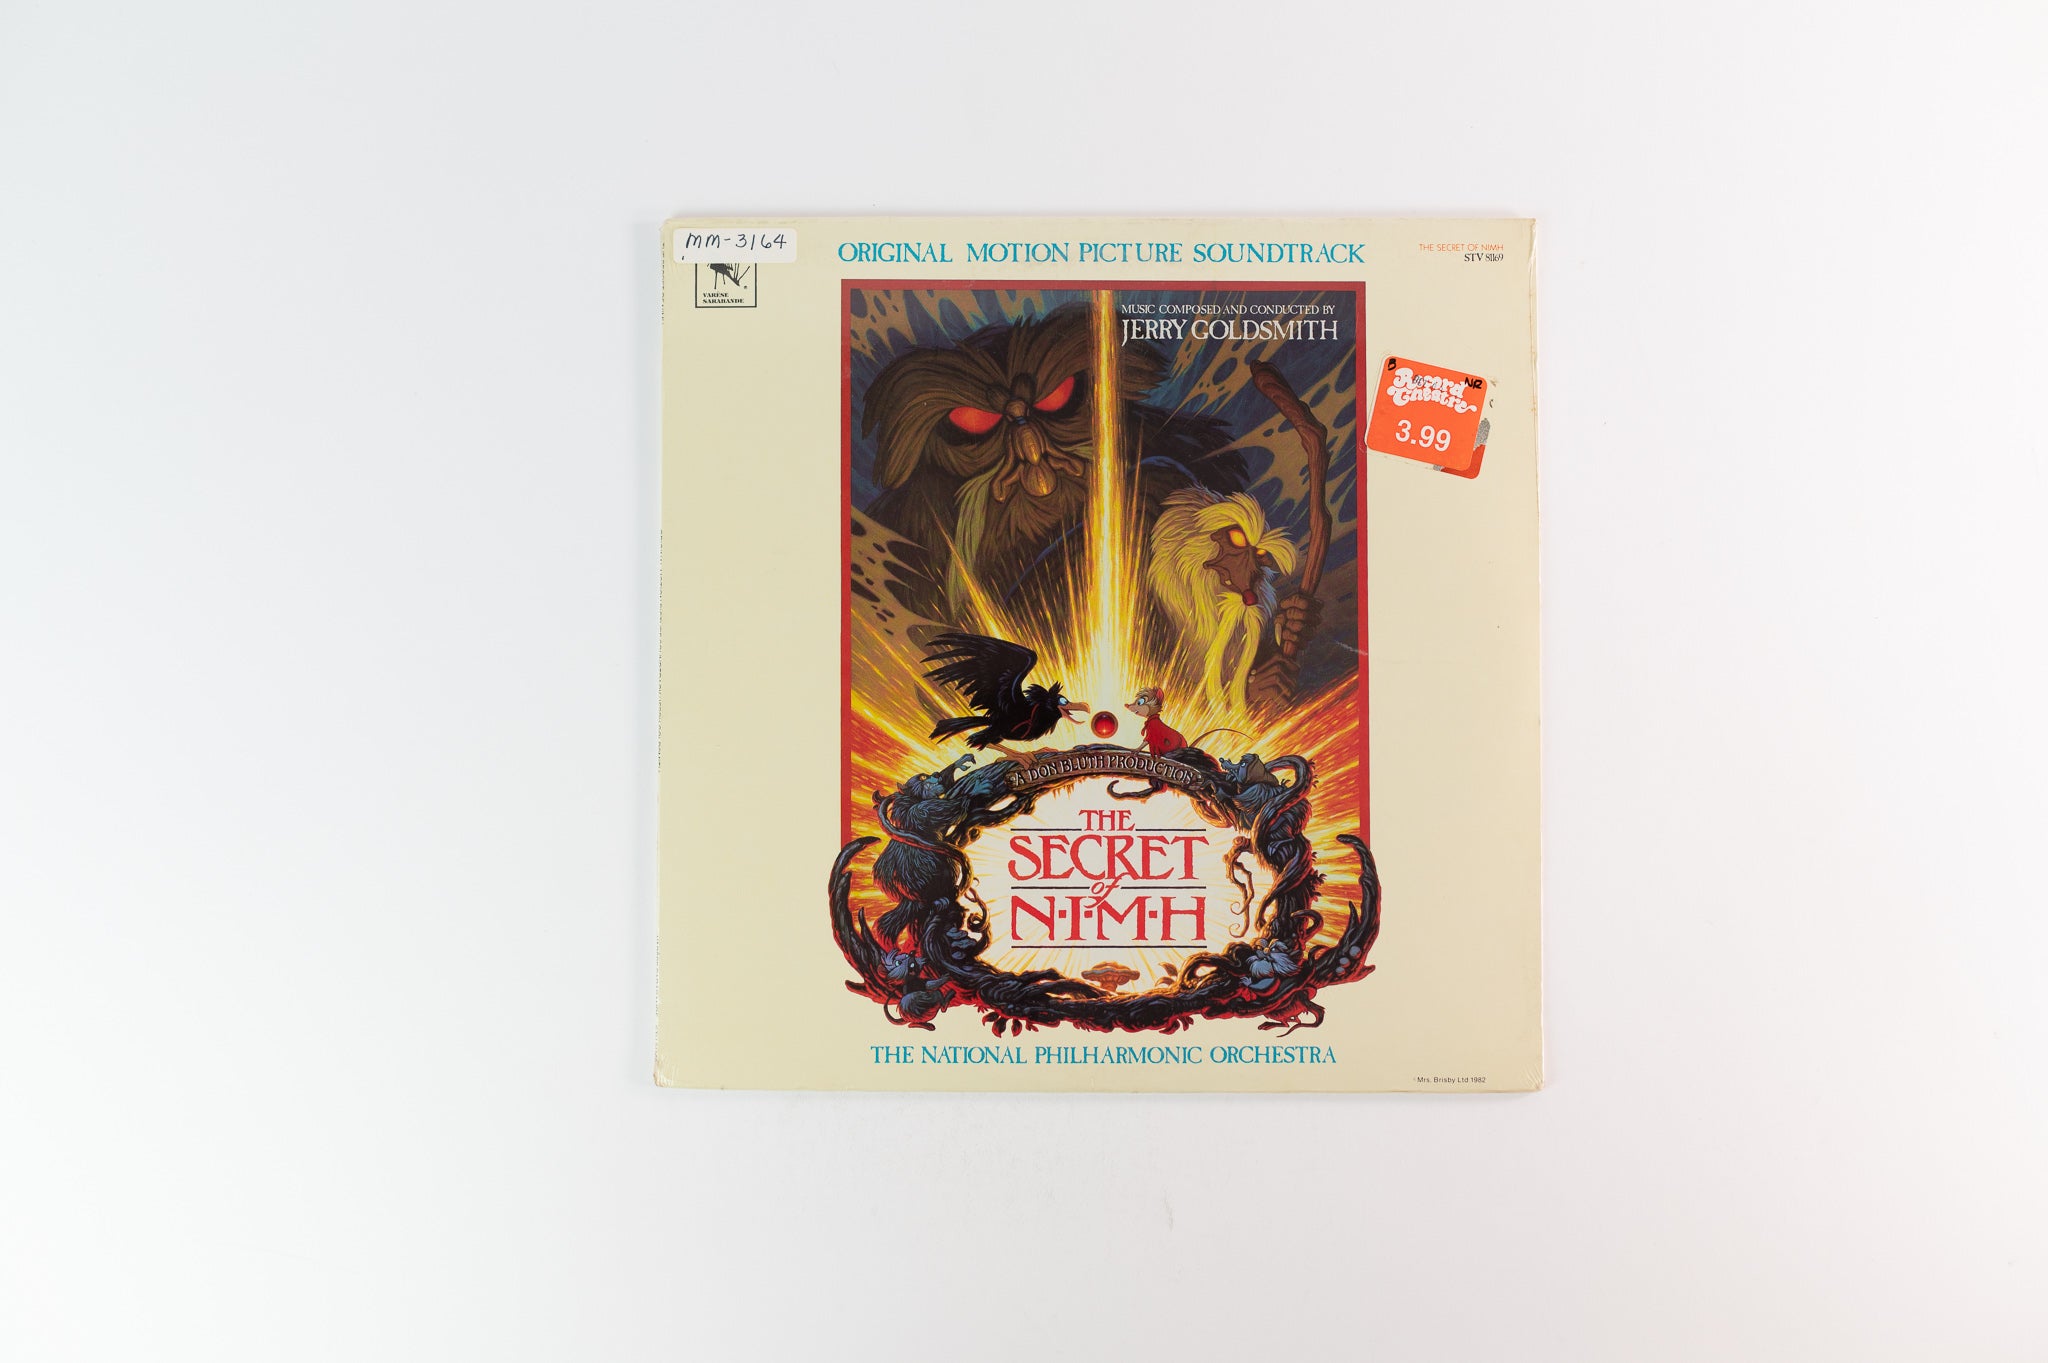 Jerry Goldsmith - The Secret Of NIMH (Original Motion Picture Soundtrack) on Varese Sarabande Sealed